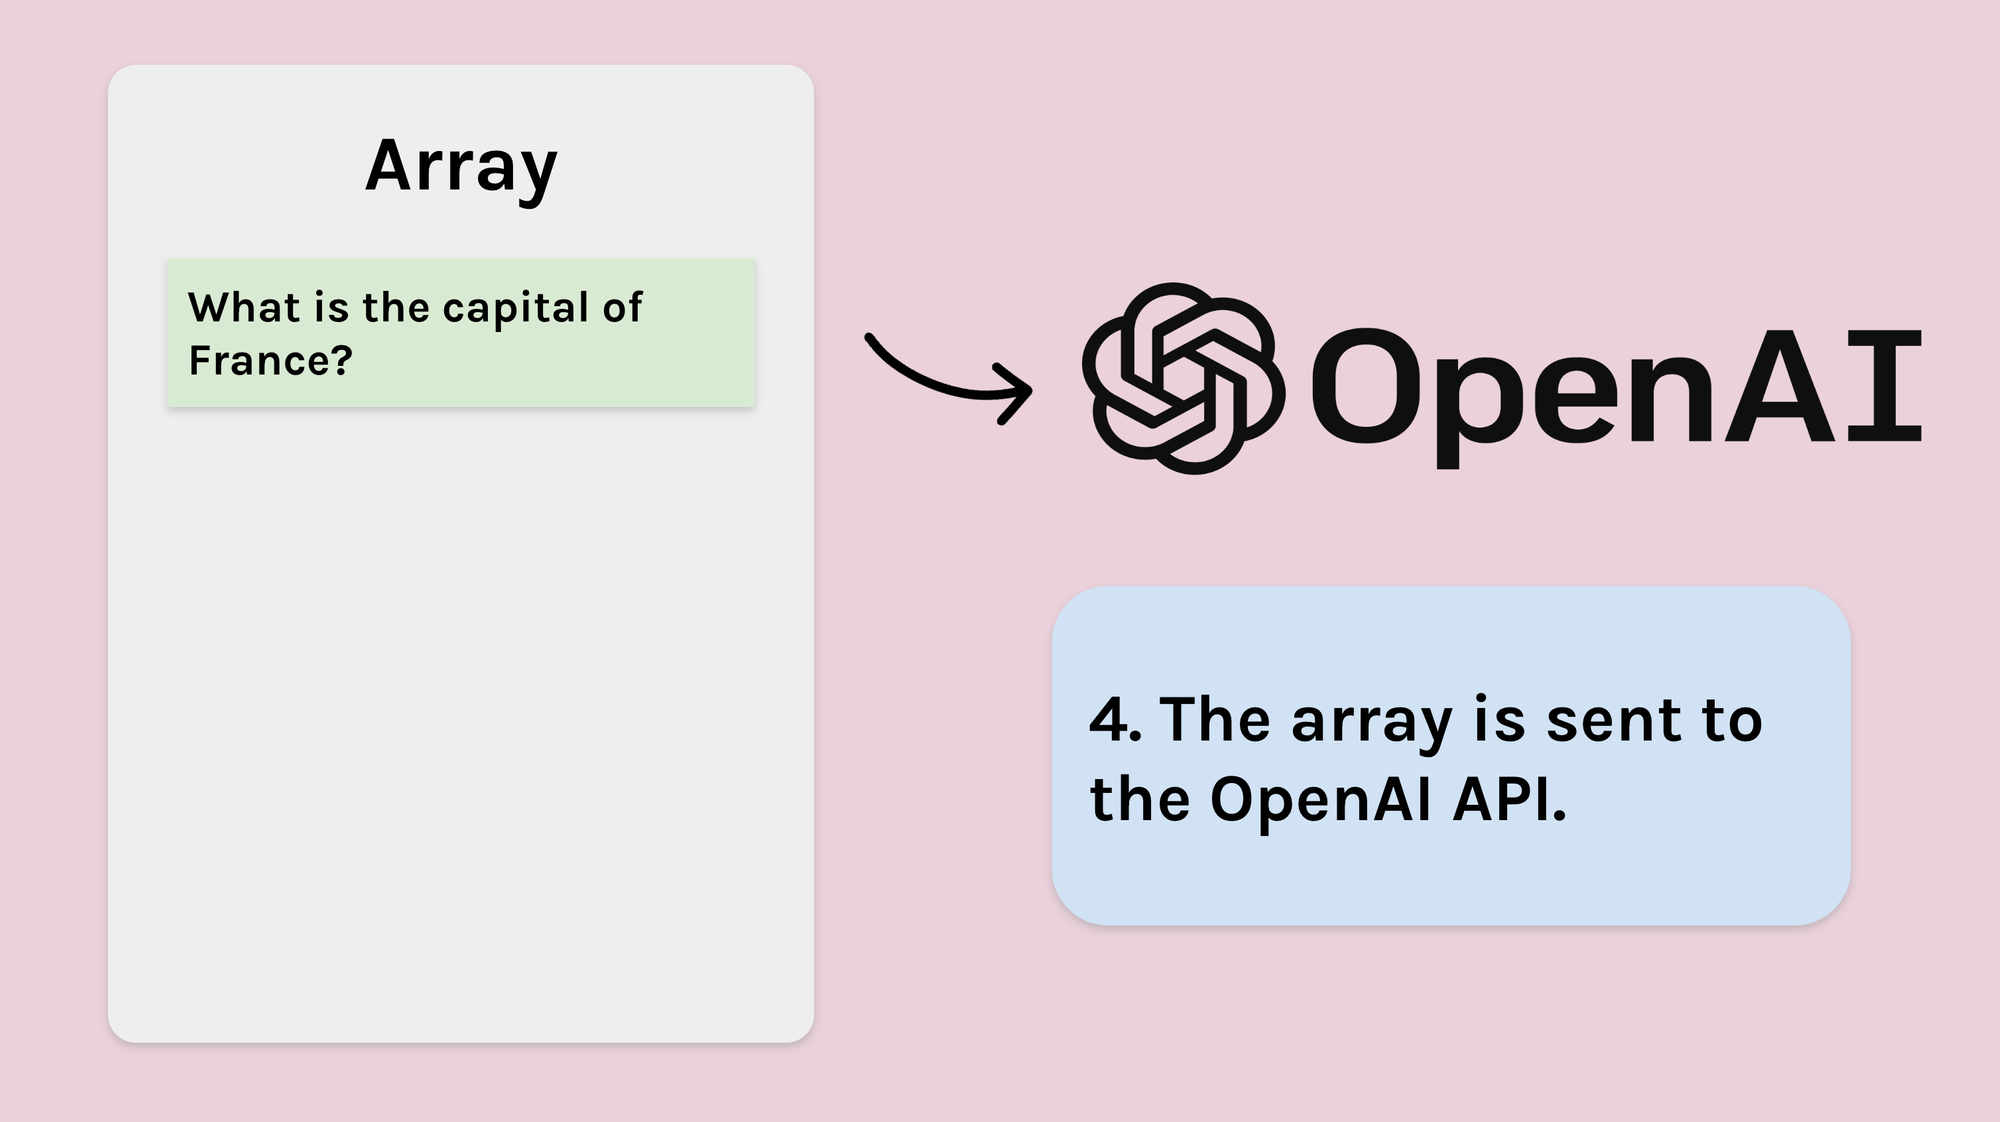 4. The array is sent to the OpenAI API.